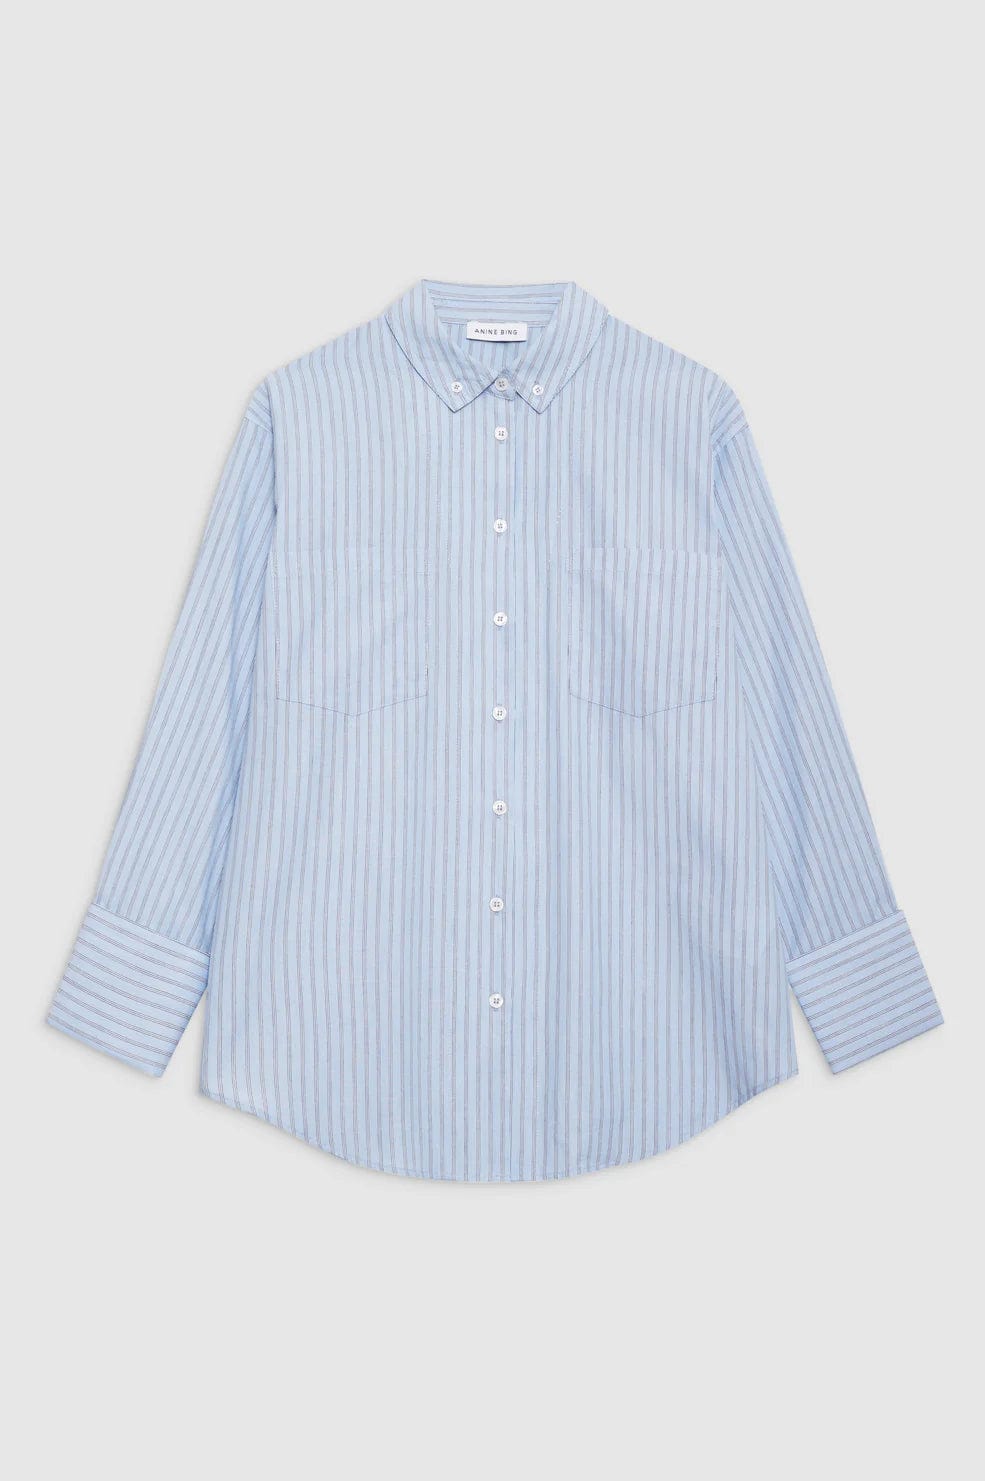 Anine Bing Shirts - Tailored Anine Bing | Catherine Shirt - Blue & White Stripe